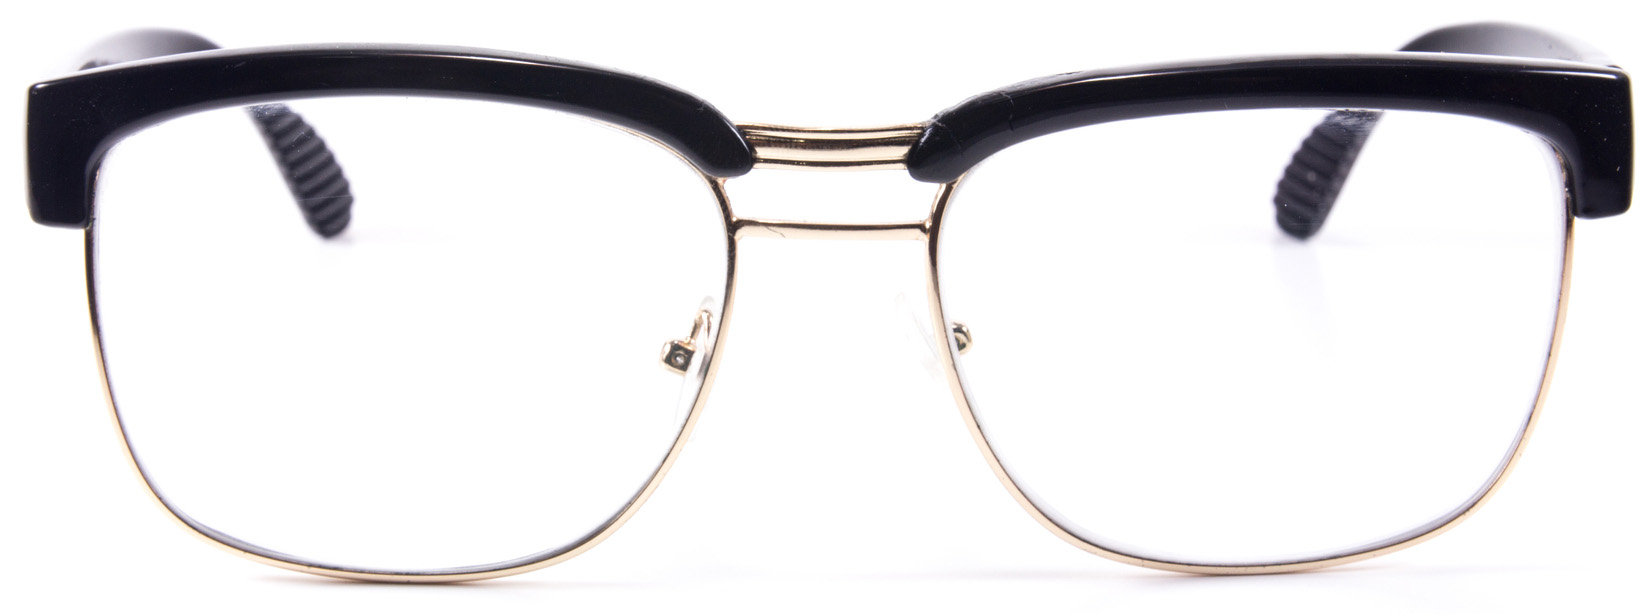 Ariel Optica Eyeglasses